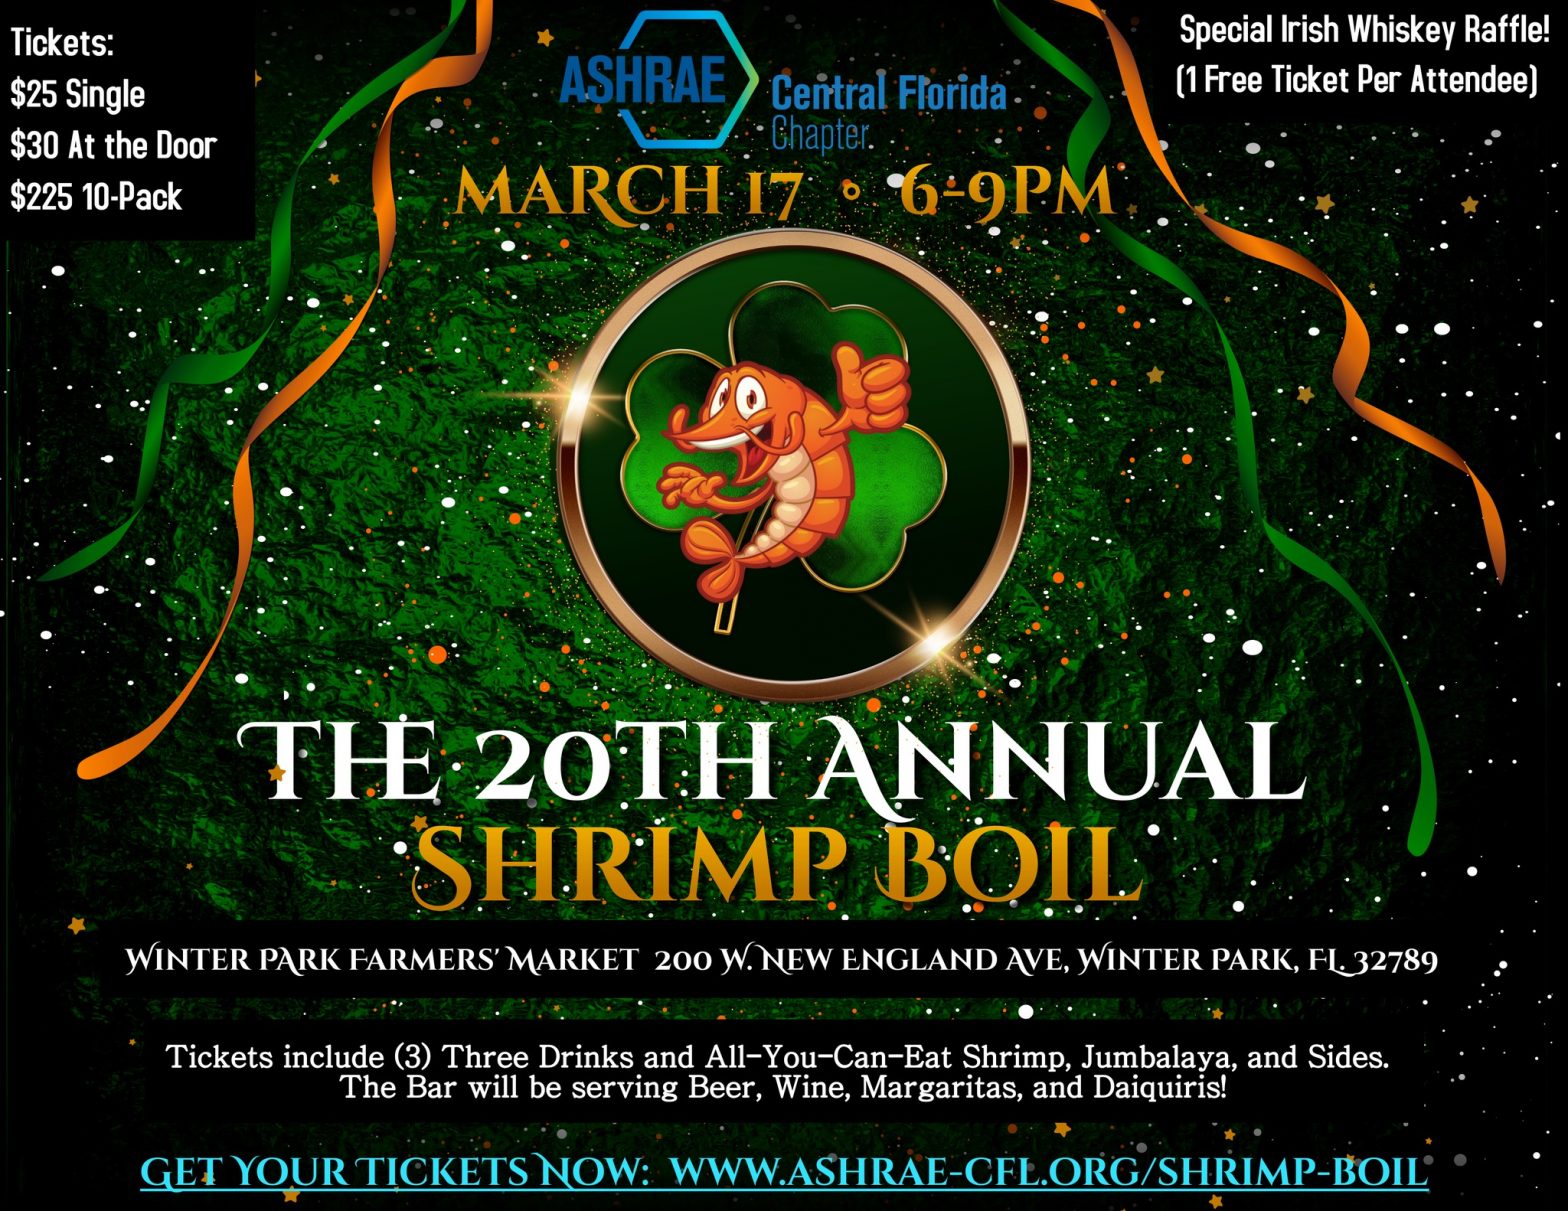 The 20th Annual Shrimp Boil